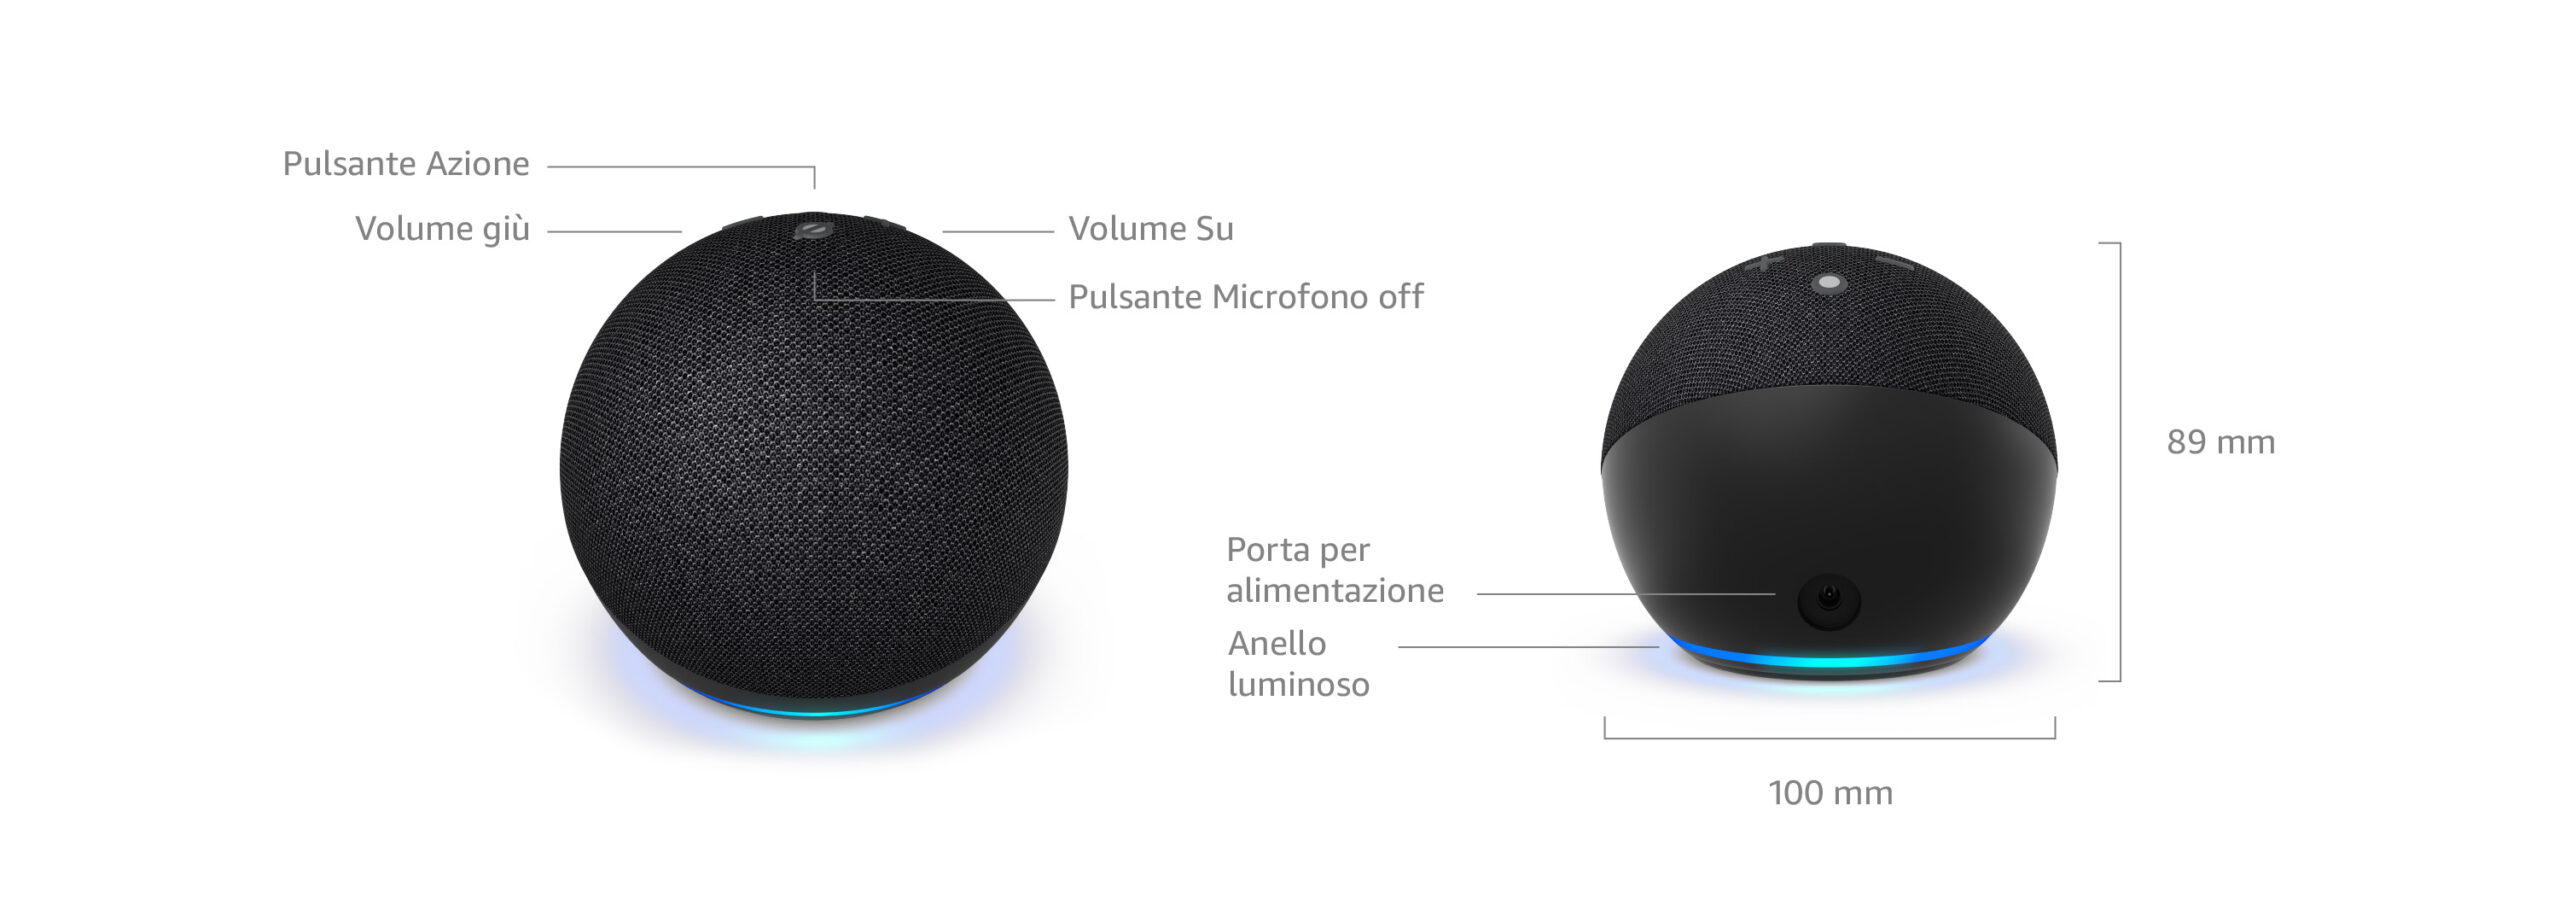 Amazon Echo Dot 5 dettagli tecnici